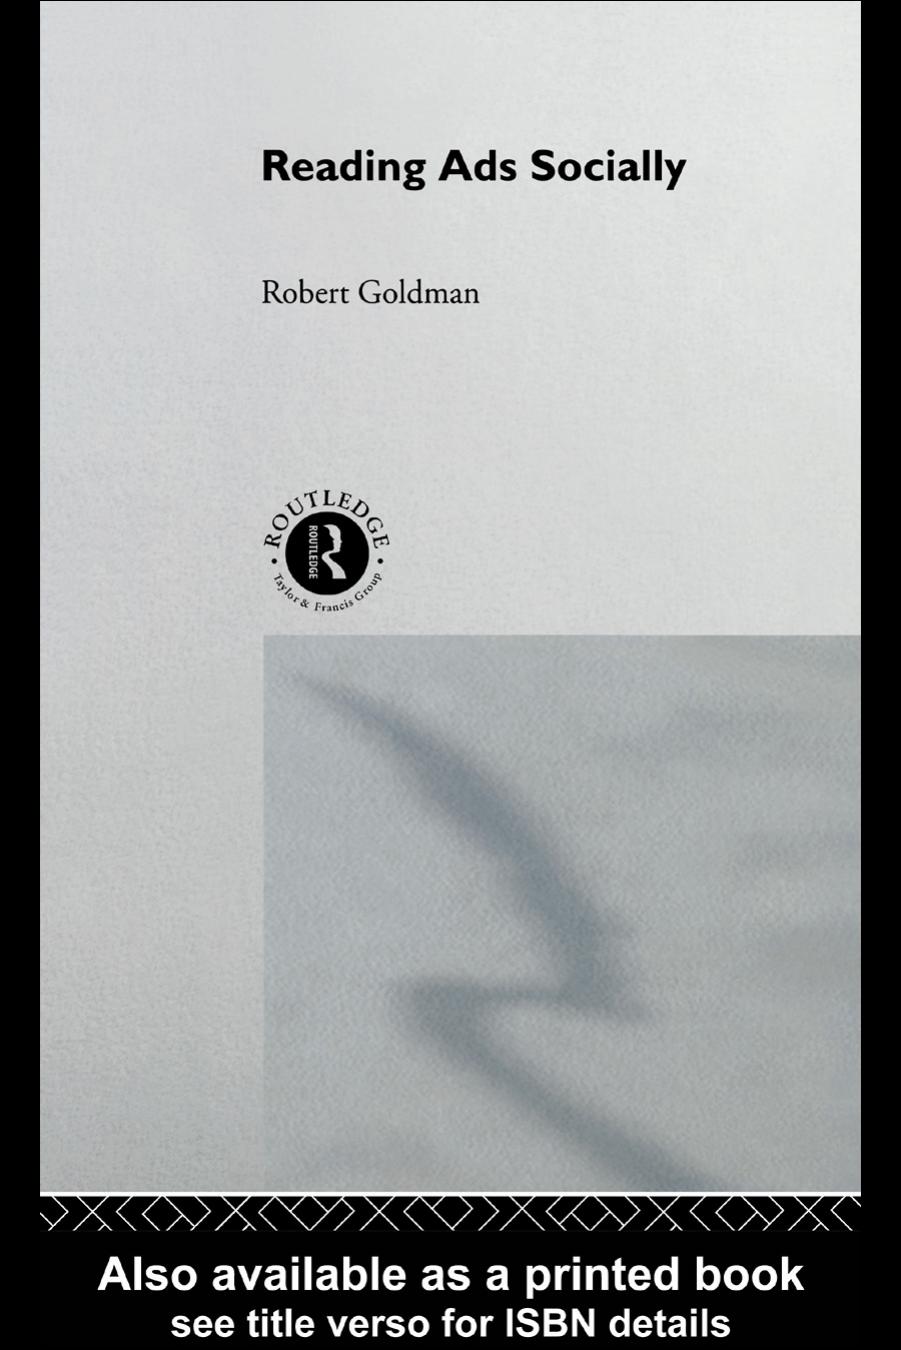 Reading Ads Socially by Robert Goldman